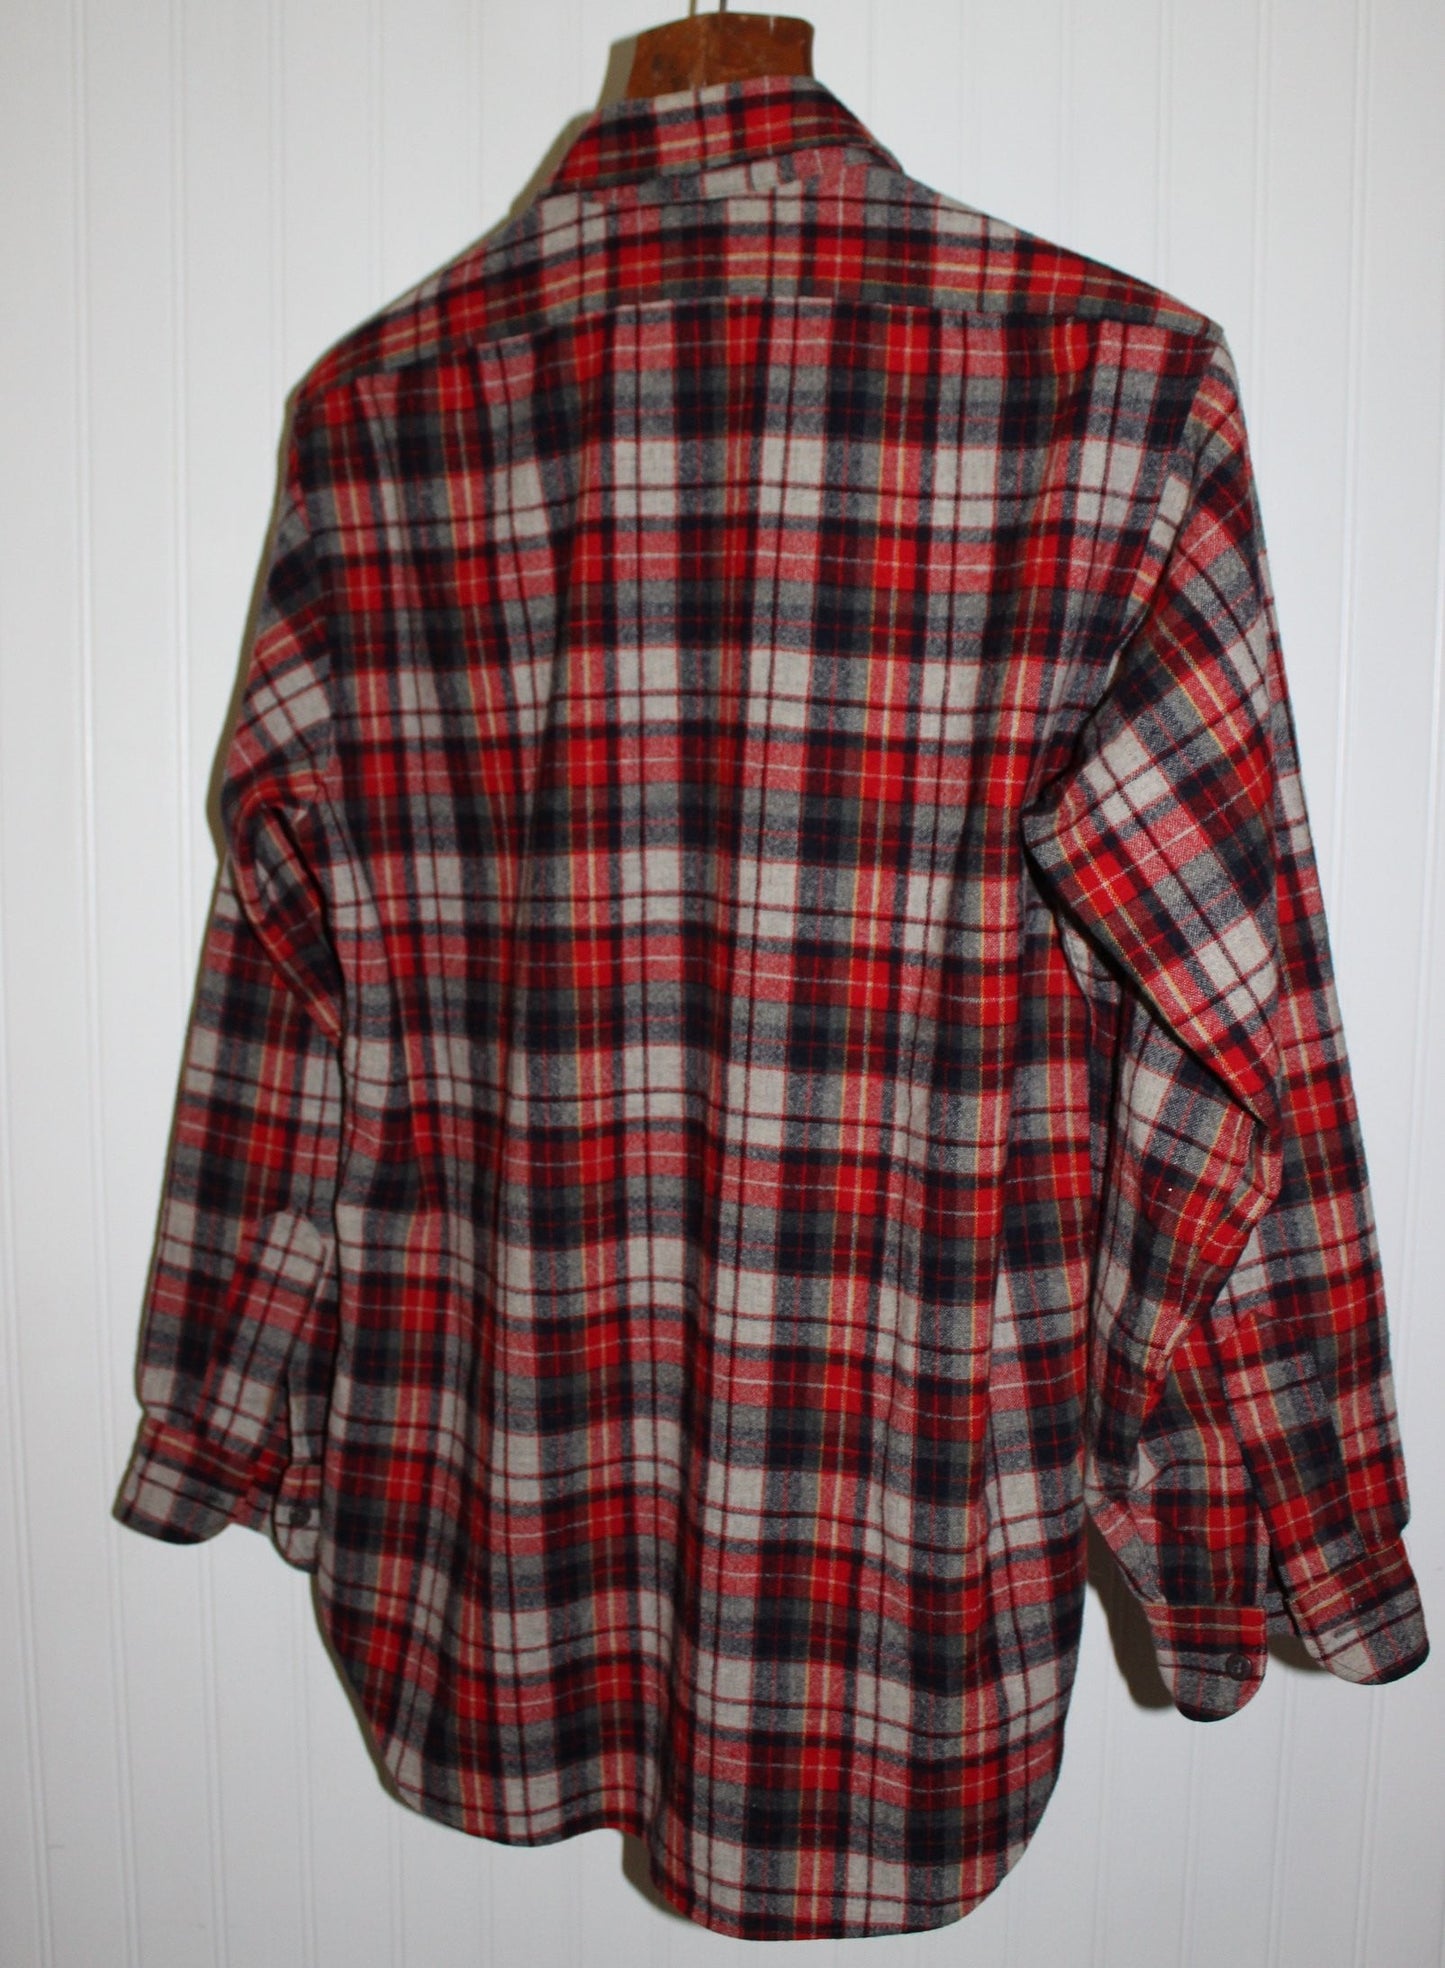 Pendleton Wool Shirt Wash Dry Vintage Old Wool Mark Red Grey Plaid bright